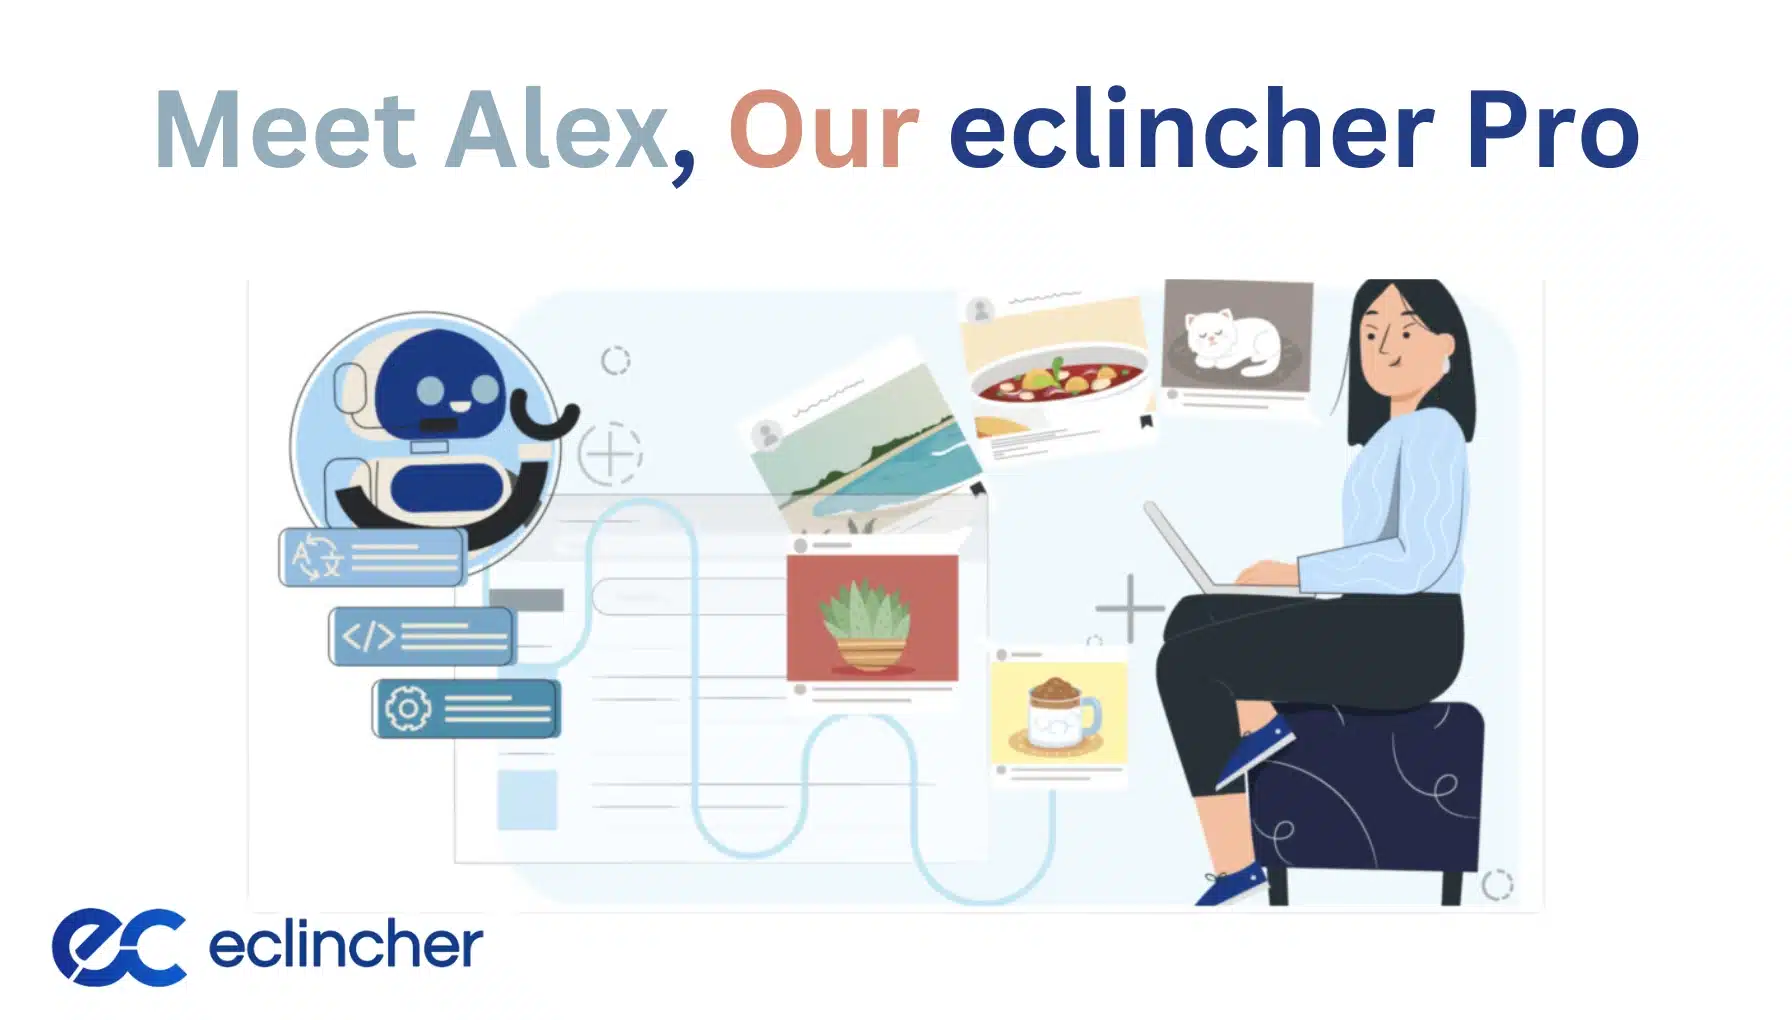 Meet Alex Our eclincher Pro